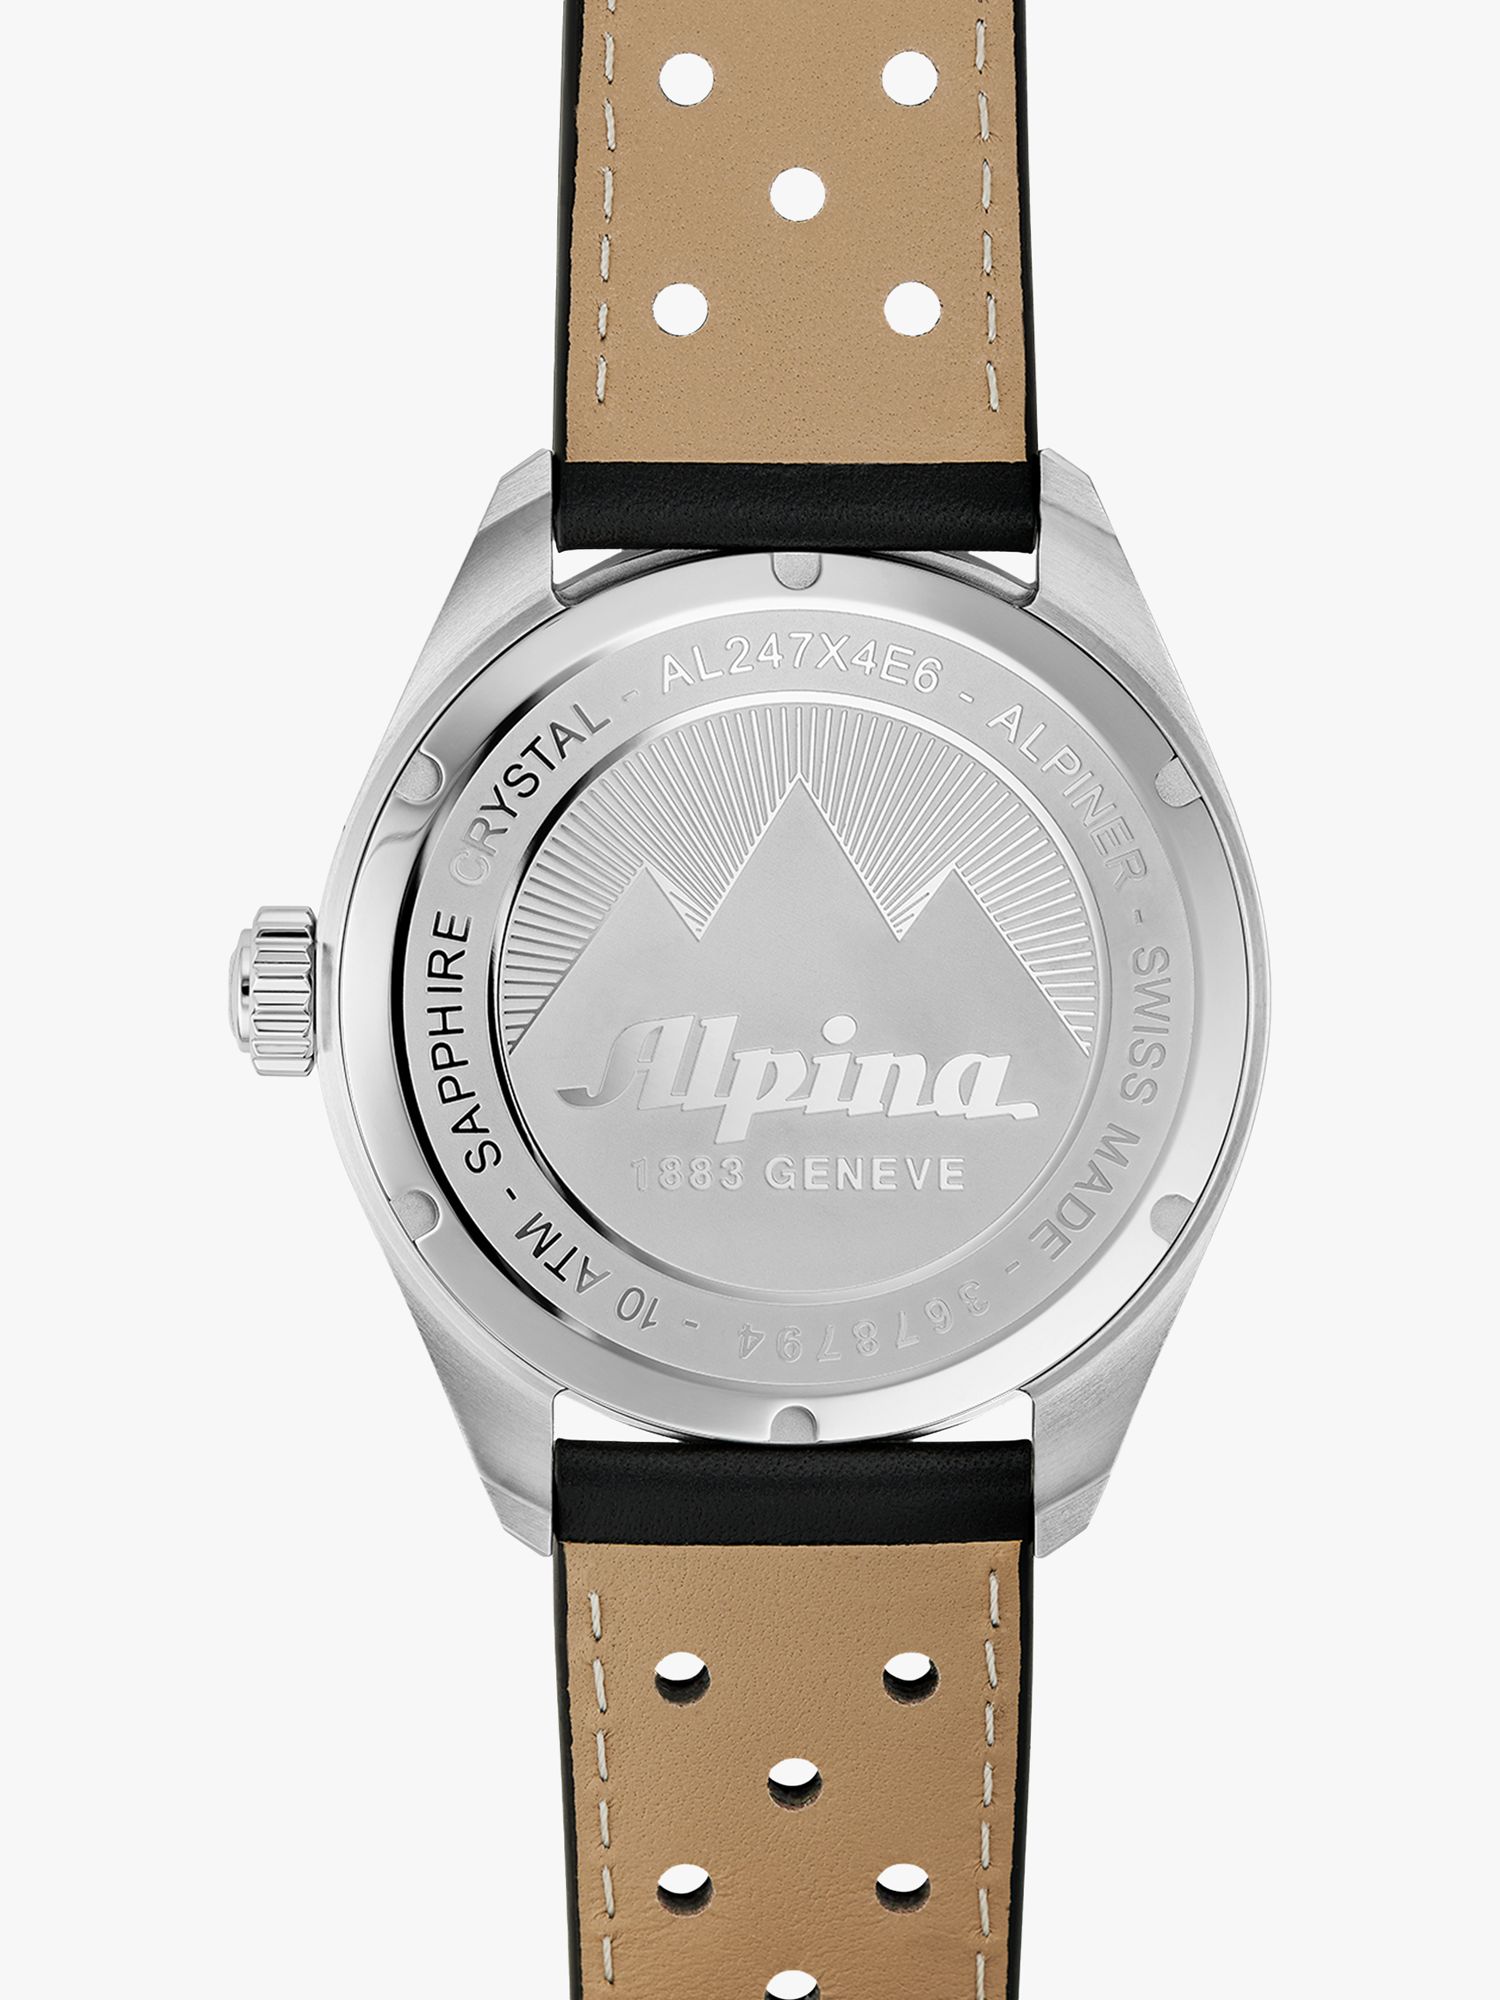 Buy Alpina AL-247NB4E6 Men's Alpiner GMT Date Leather Strap Watch, Black/Blue Online at johnlewis.com